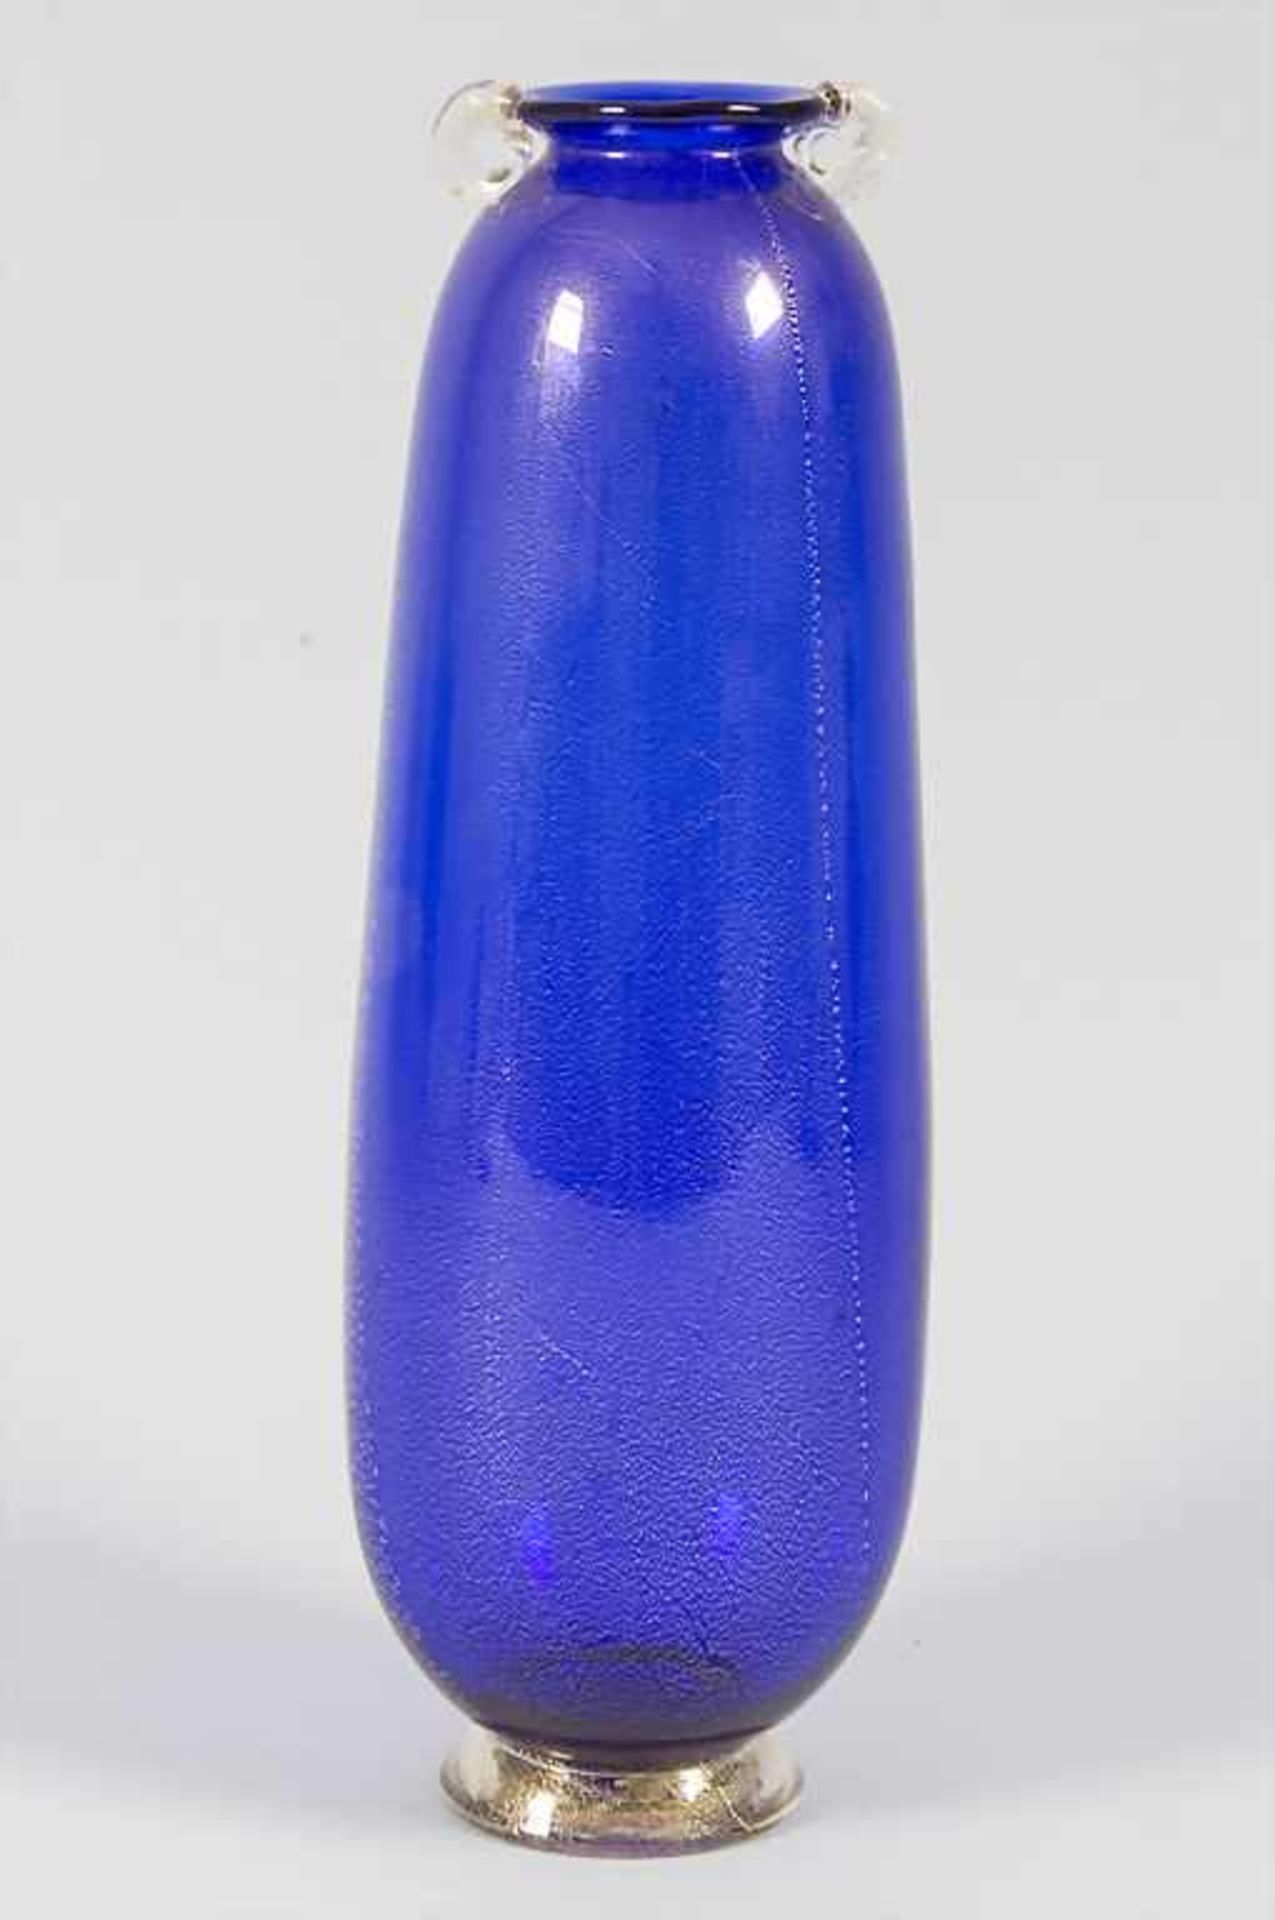 Glasziervase / A decorative glass vase, wohl AVEM (Arte Vetraria Muranese), Murano, 40/50er Jahre,